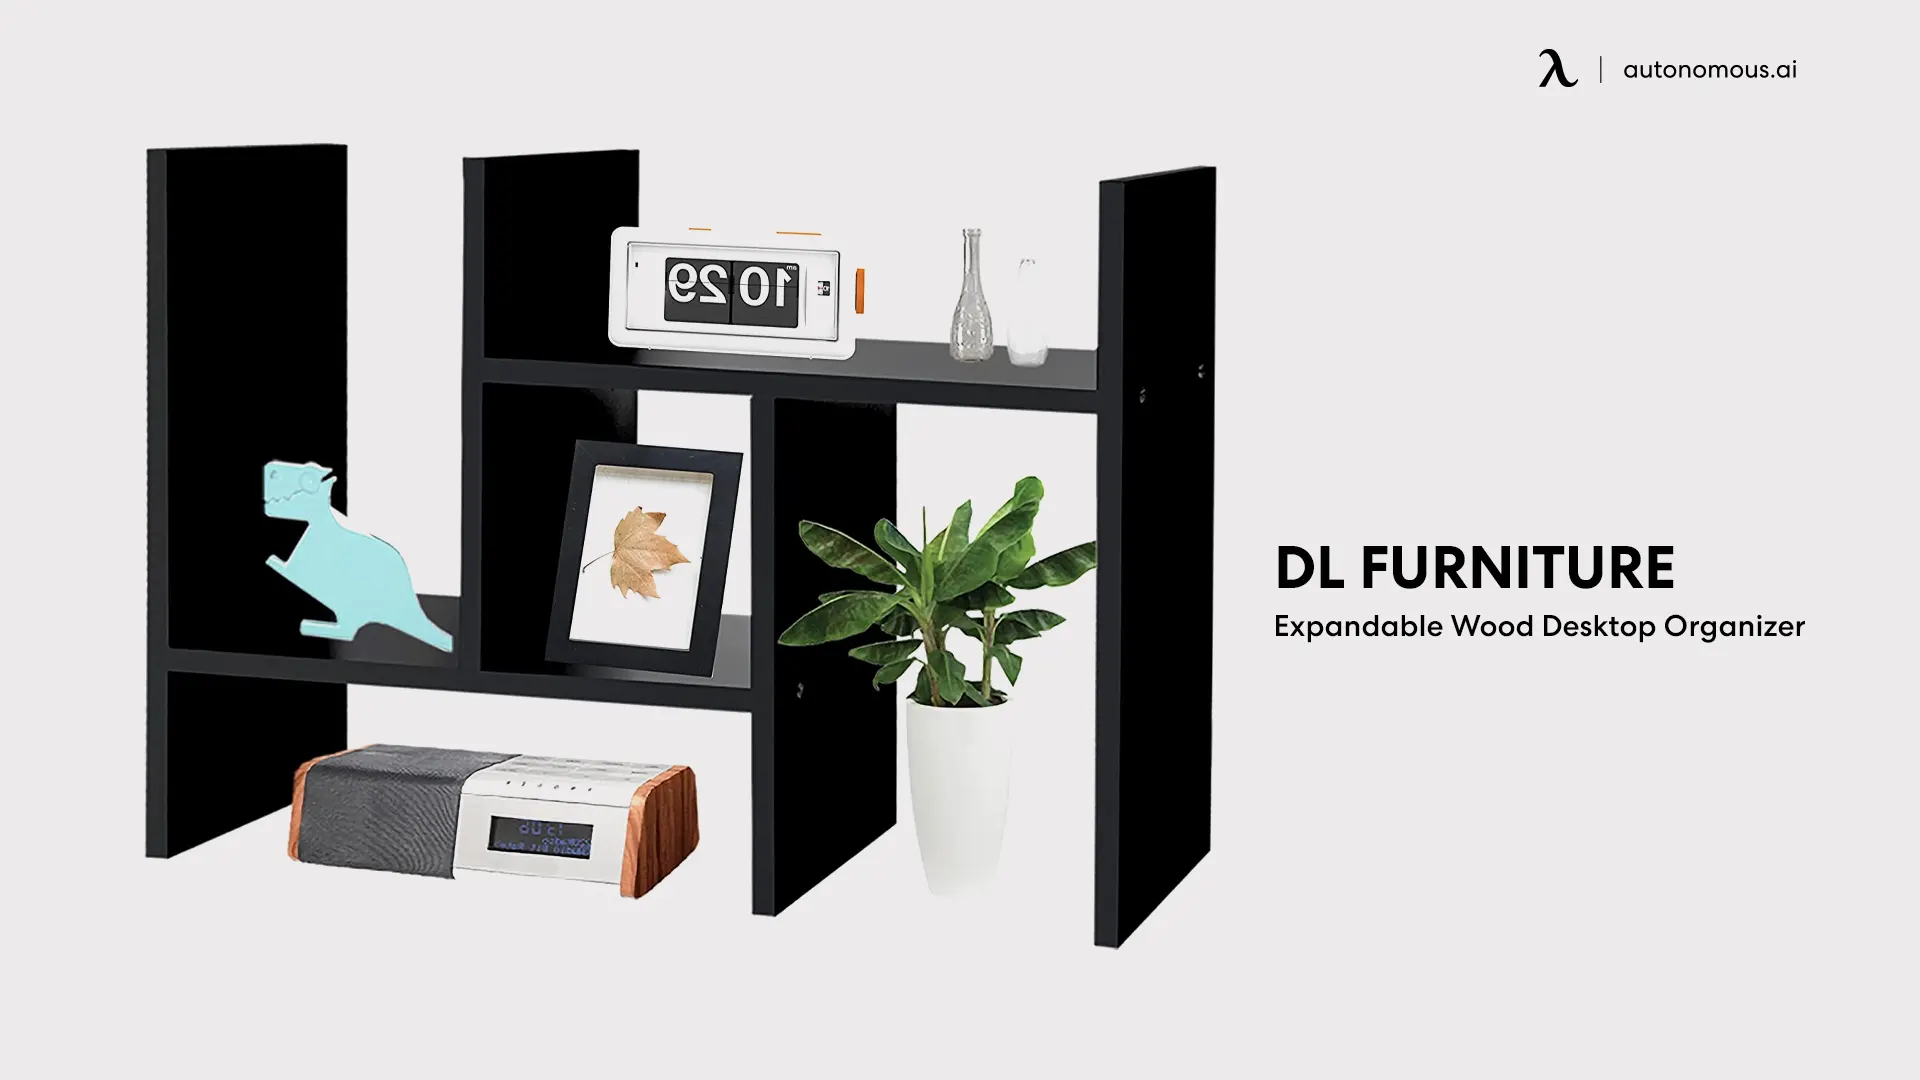 Expandable Wood Desktop Organizer by DL Furniture